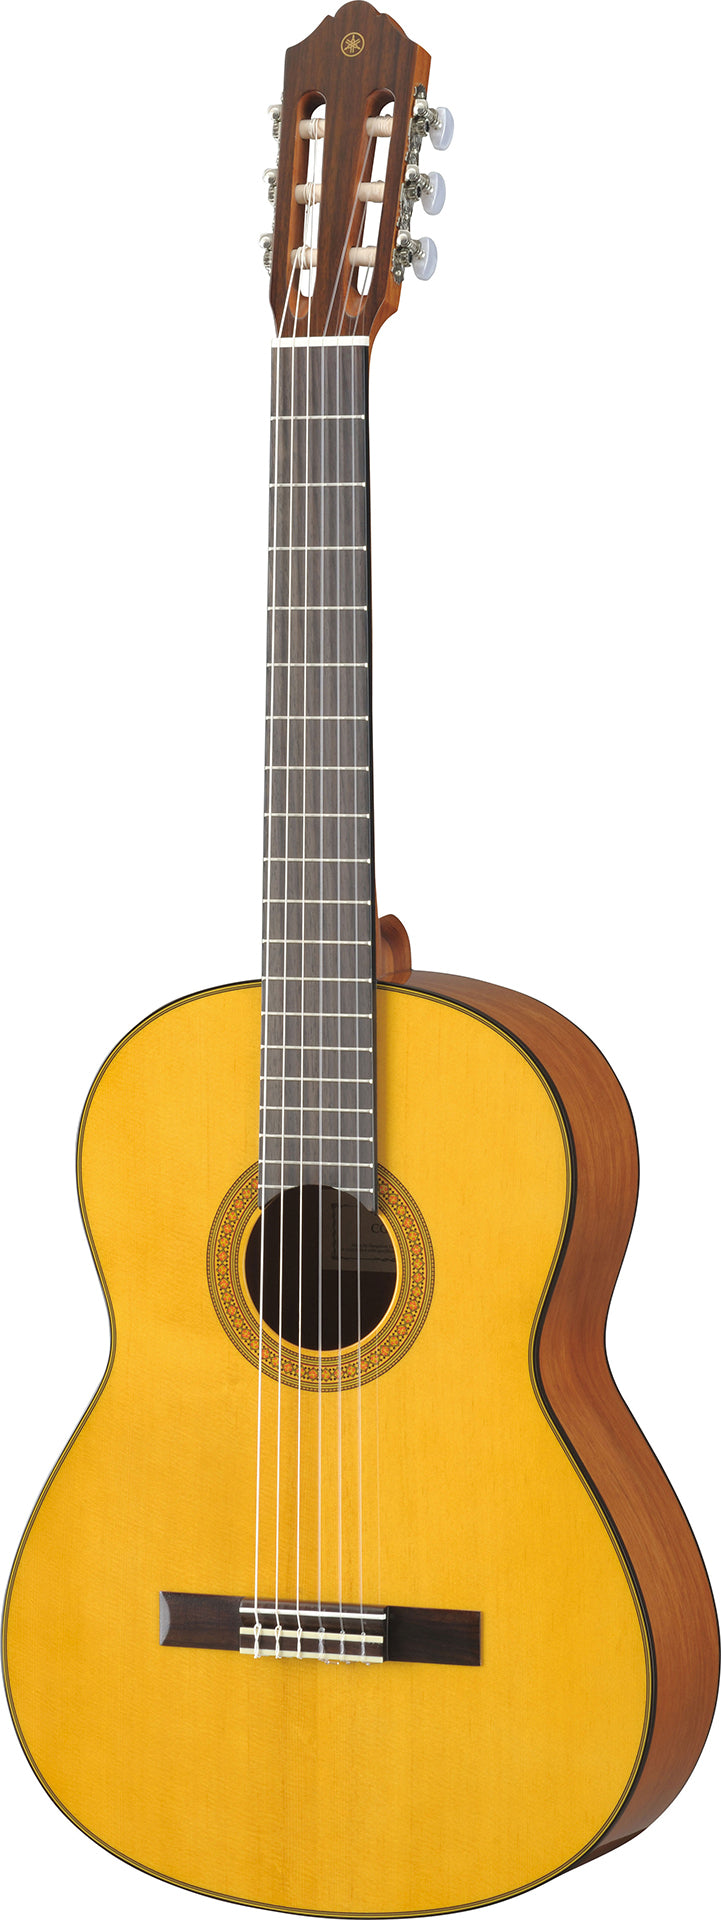 Yamaha CG142SH Solid Englemann Top Natural Classical Acoustic Guitar